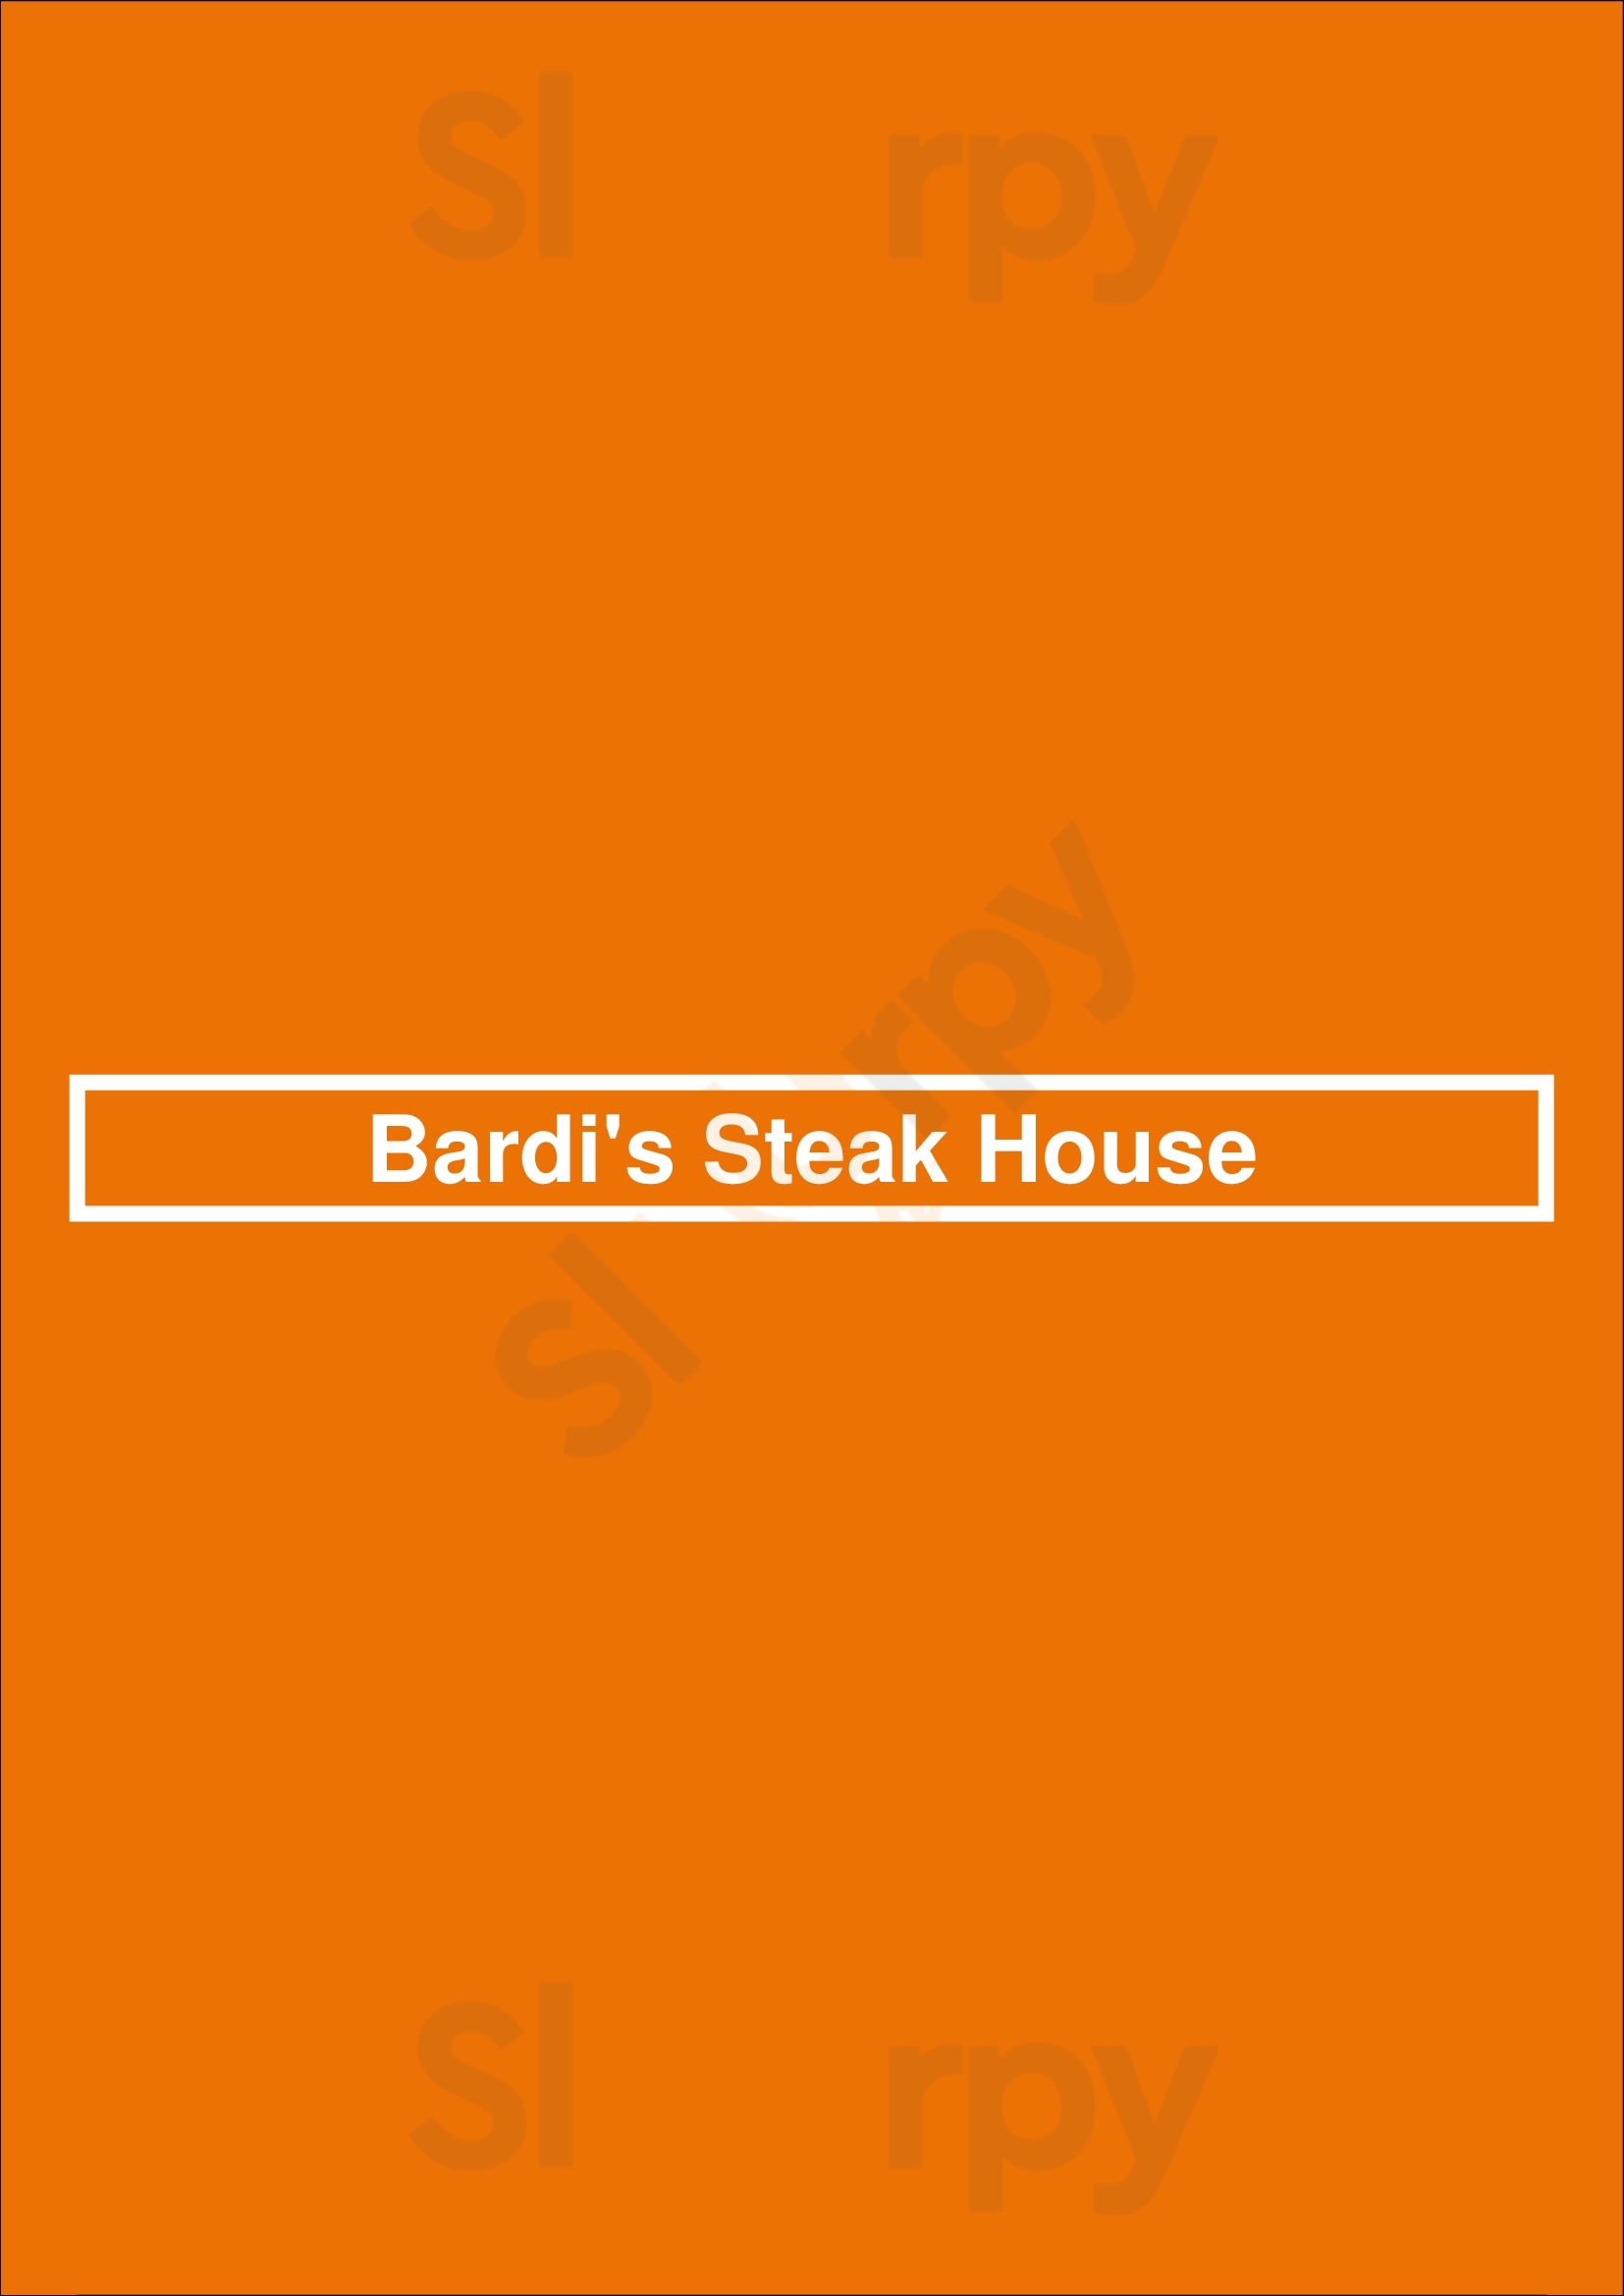 Bardi's Steak House Toronto Menu - 1